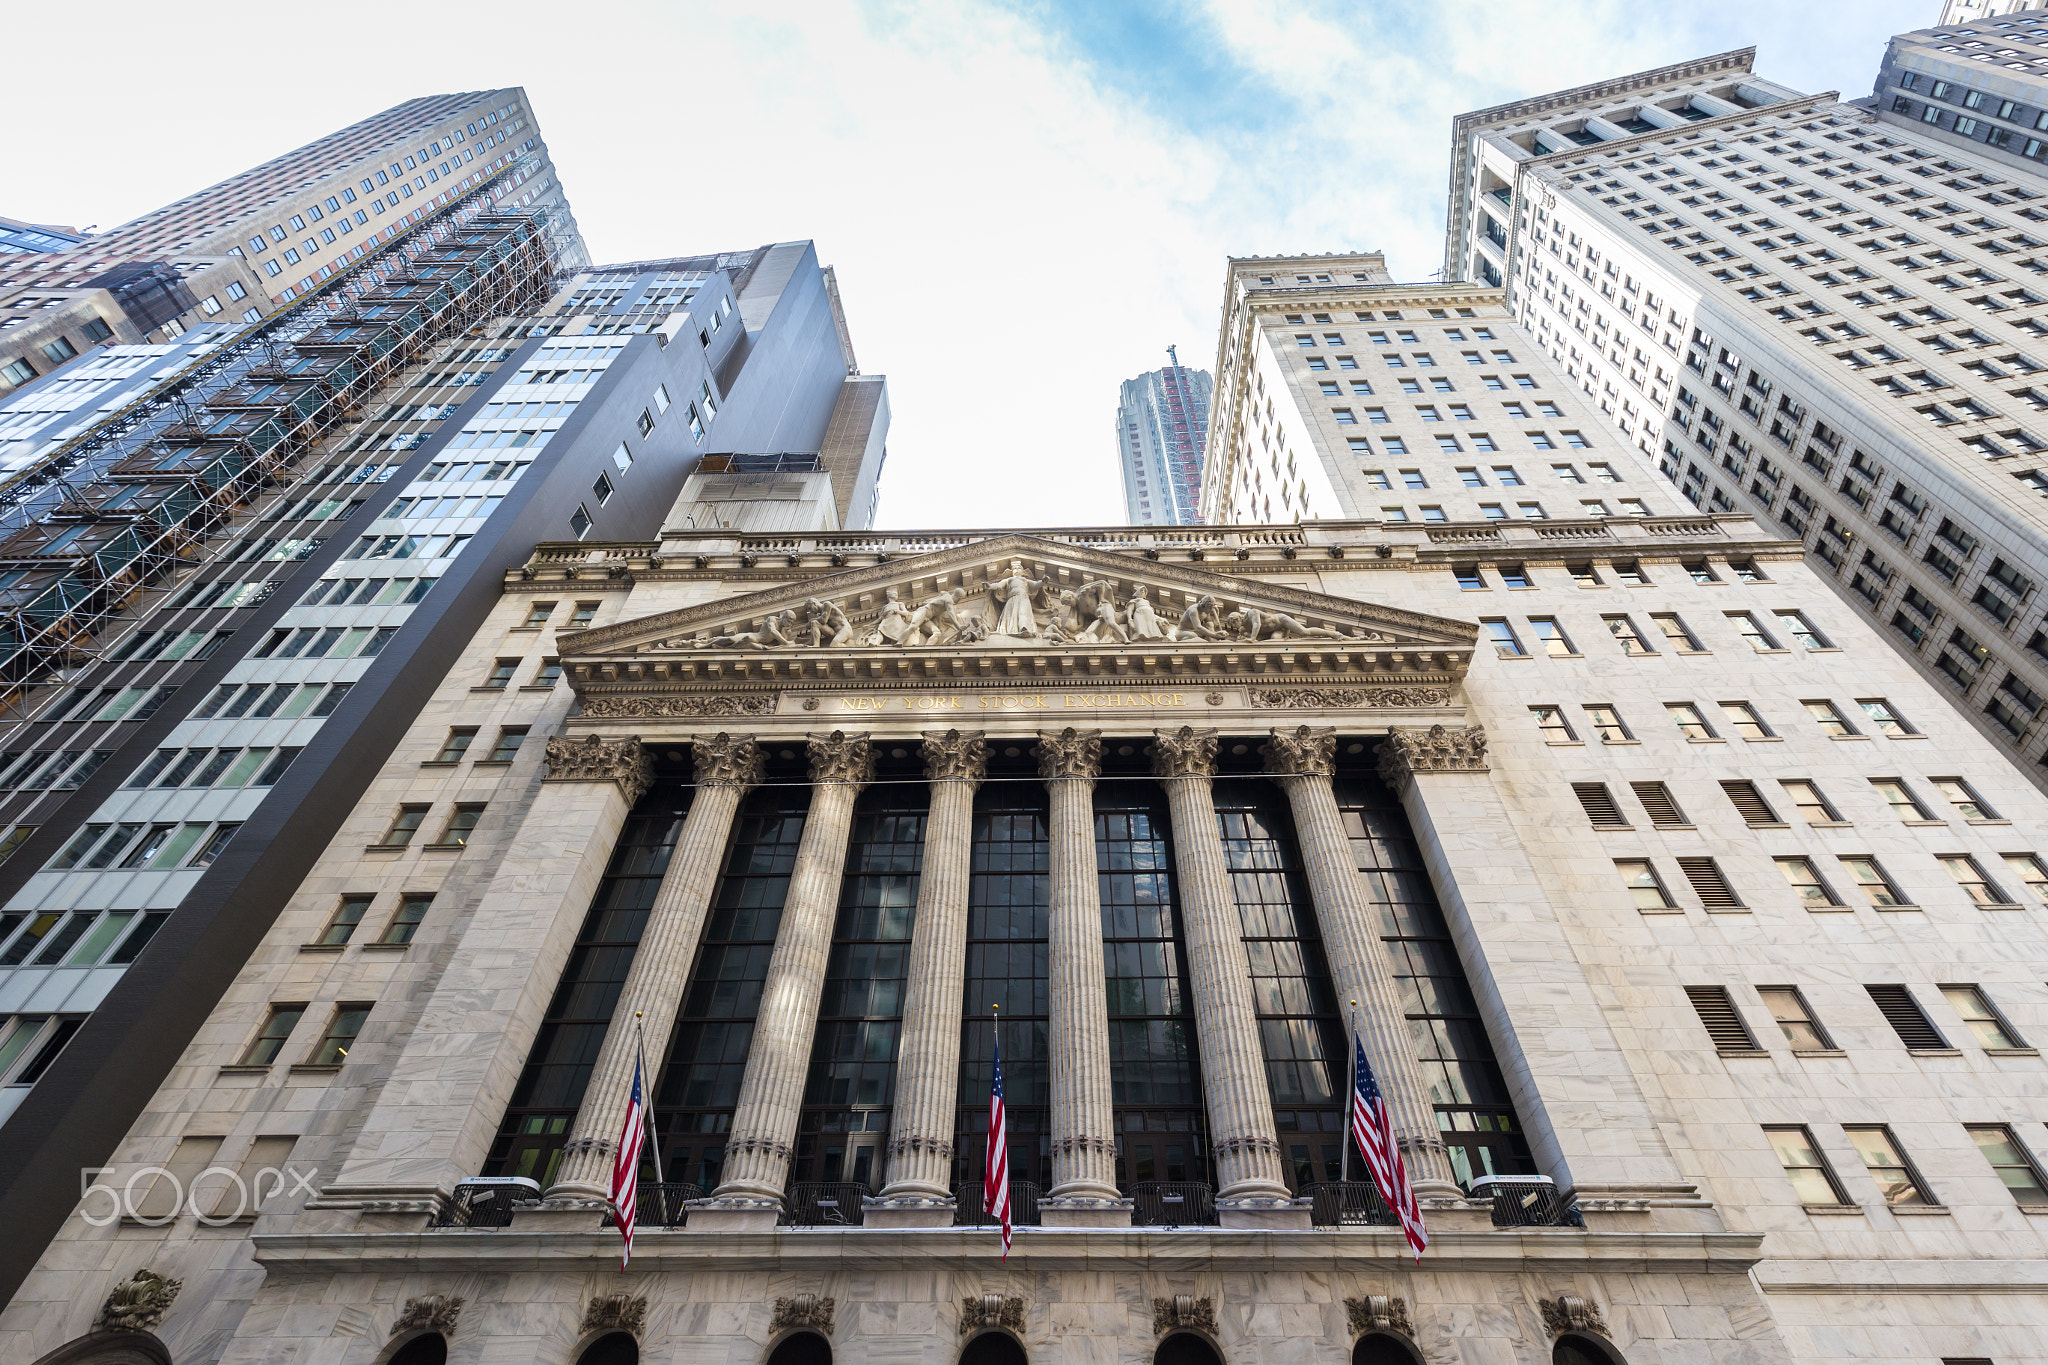 Exterior of New york Stock Exchange, Wall street, lower Manhattan, New York City, USA.